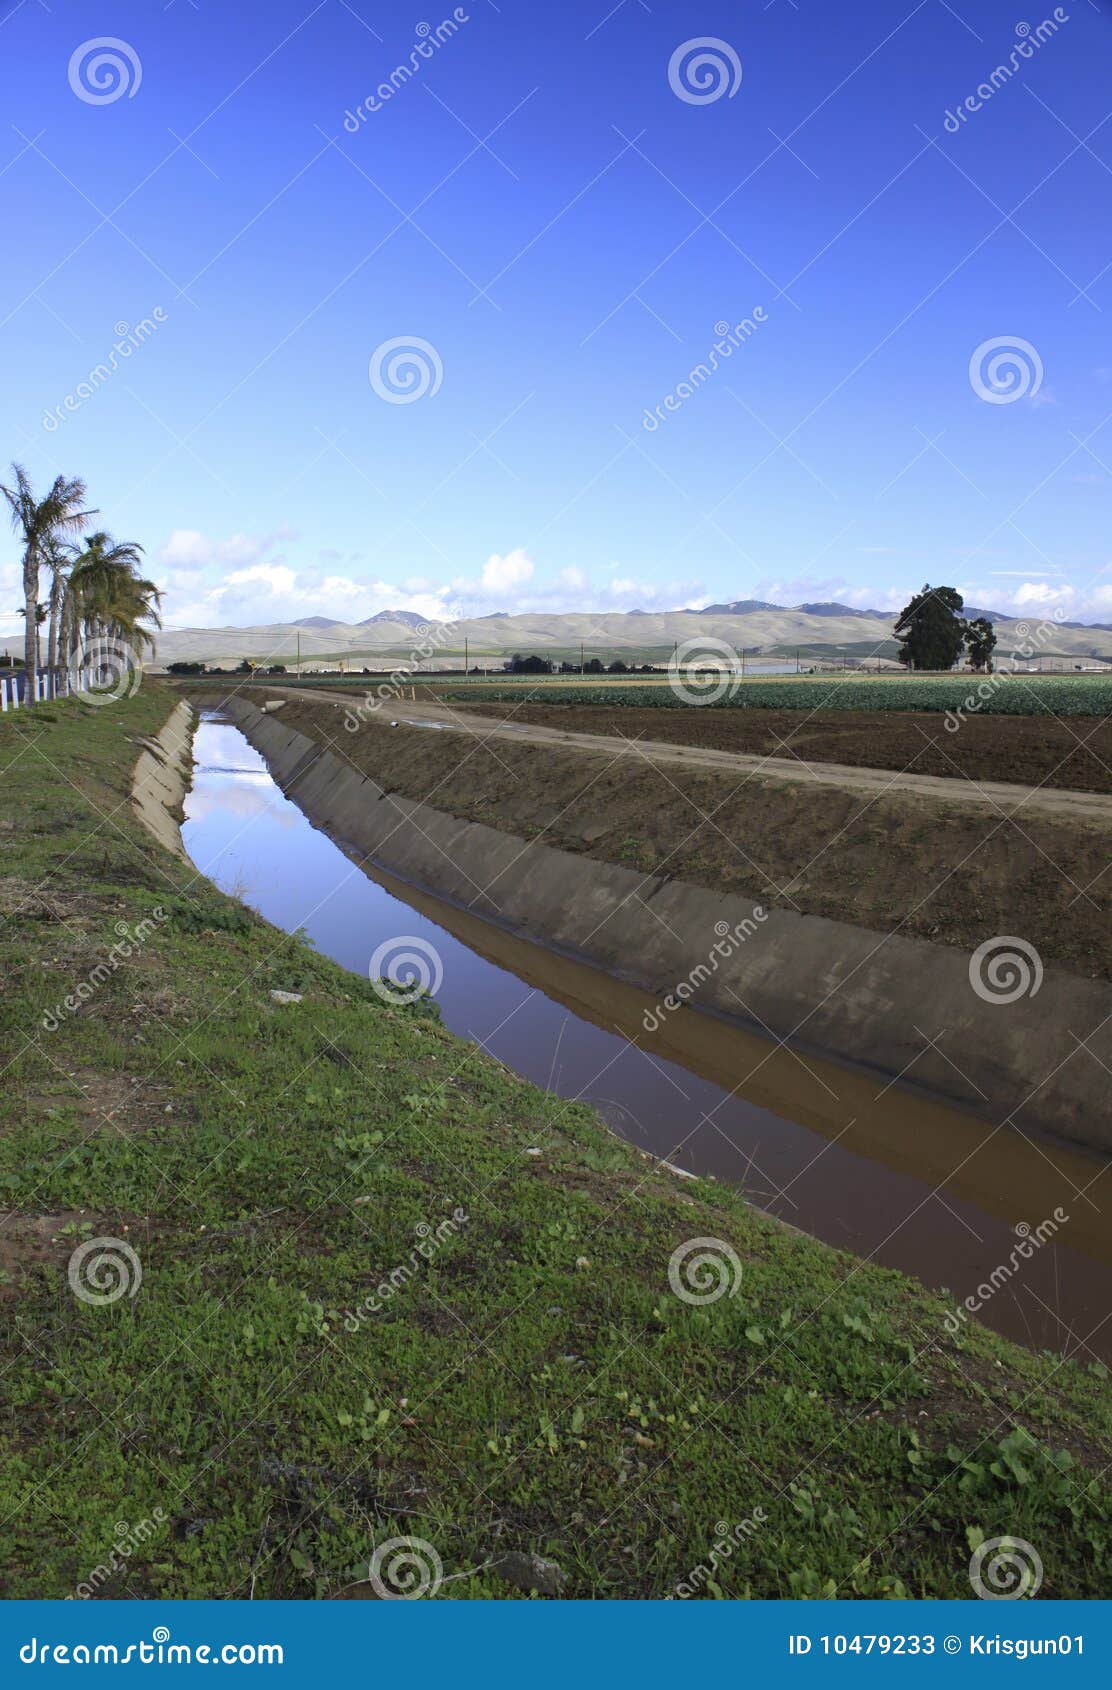 california drainage ditch